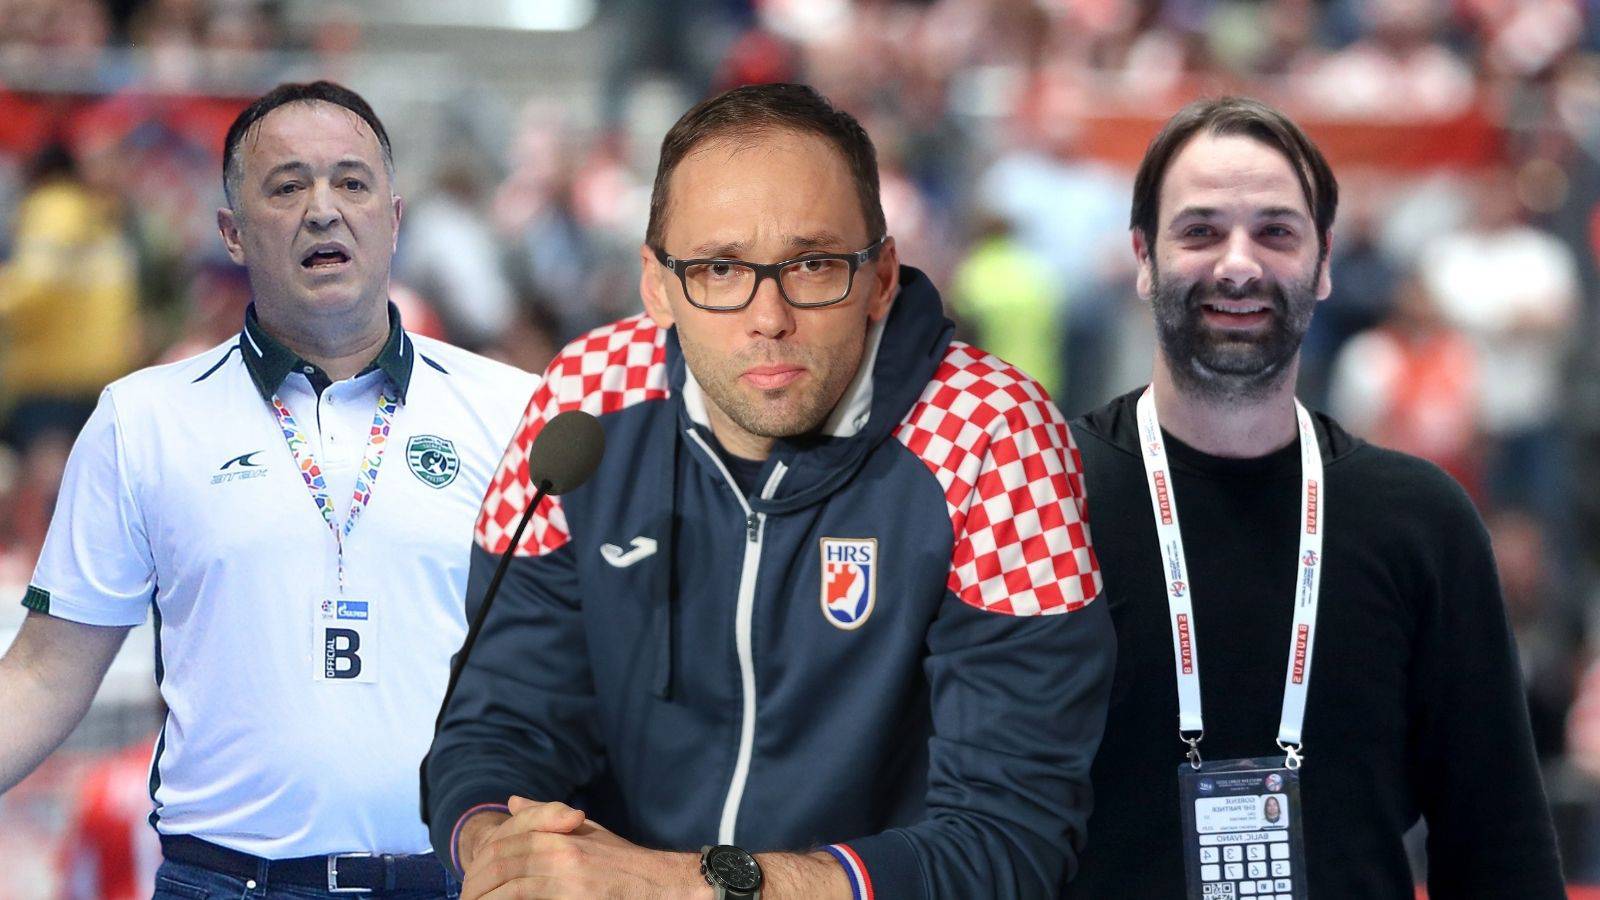 Goluža najbolji trener slovačke lige: Reprezentacija? Nisam htio govoriti da me ne tumače krivo